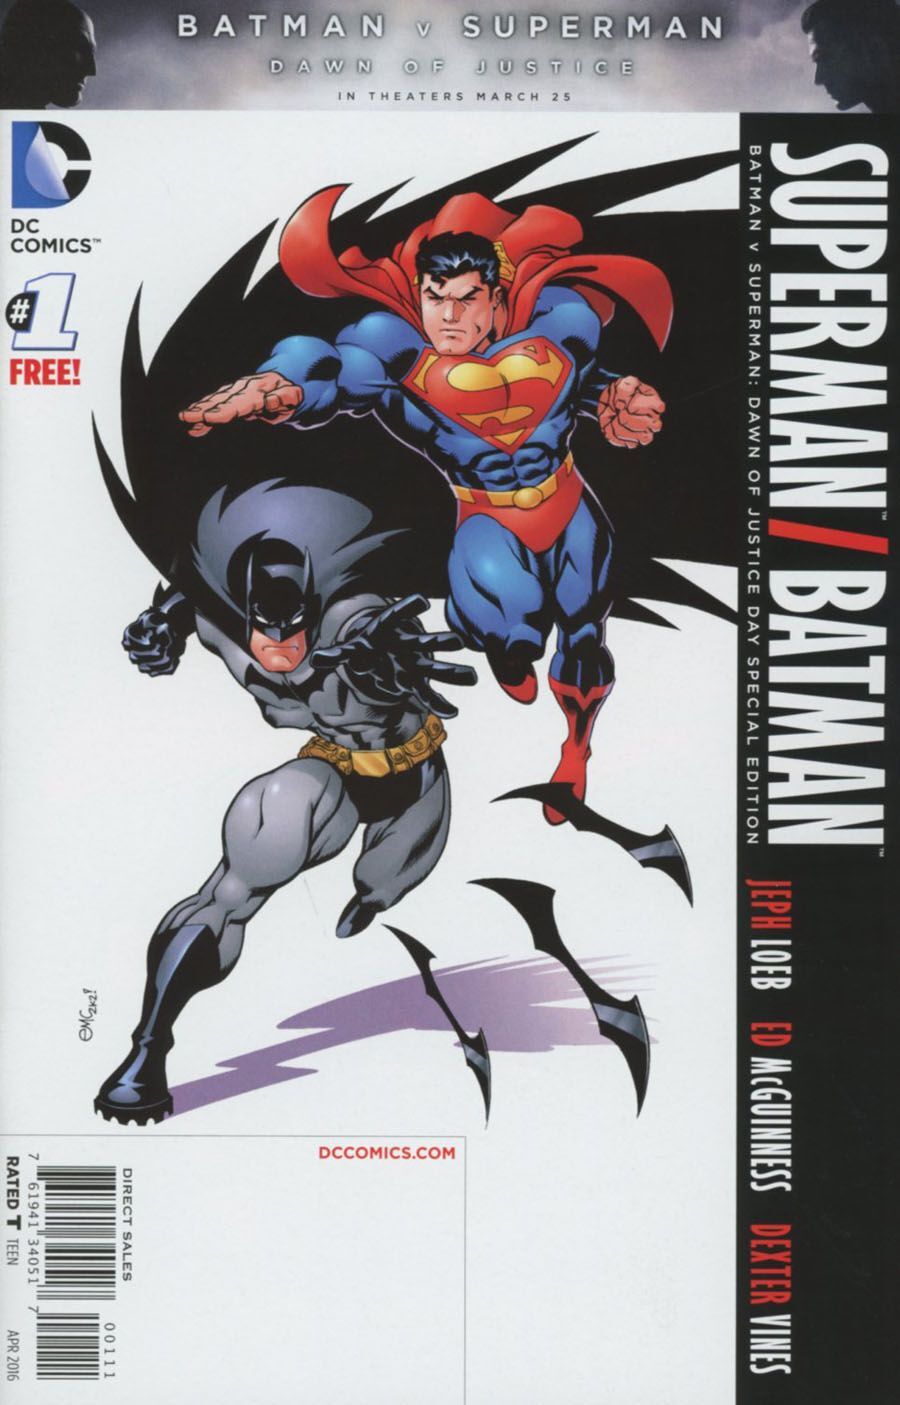 SUPERMAN BATMAN SPECIAL EDITION 1 RARE GIVEAWAY PROMO NM DAWN OF JUSTICE MOVIE